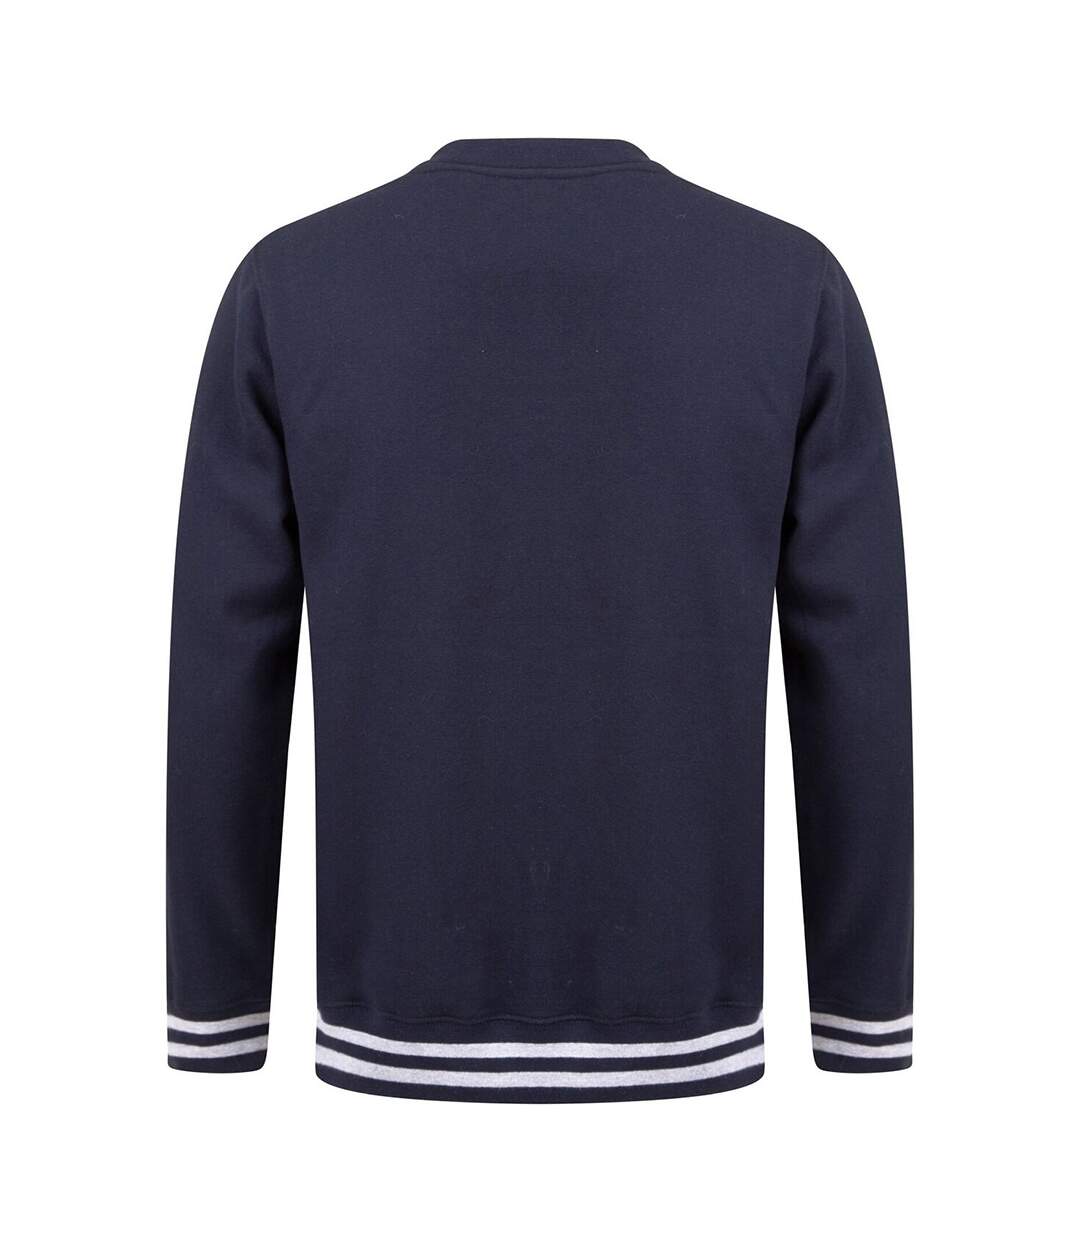 Front Row - Sweatshirt RAYURE - Unisexe (Bleu marine / gris chiné) - UTPC3975